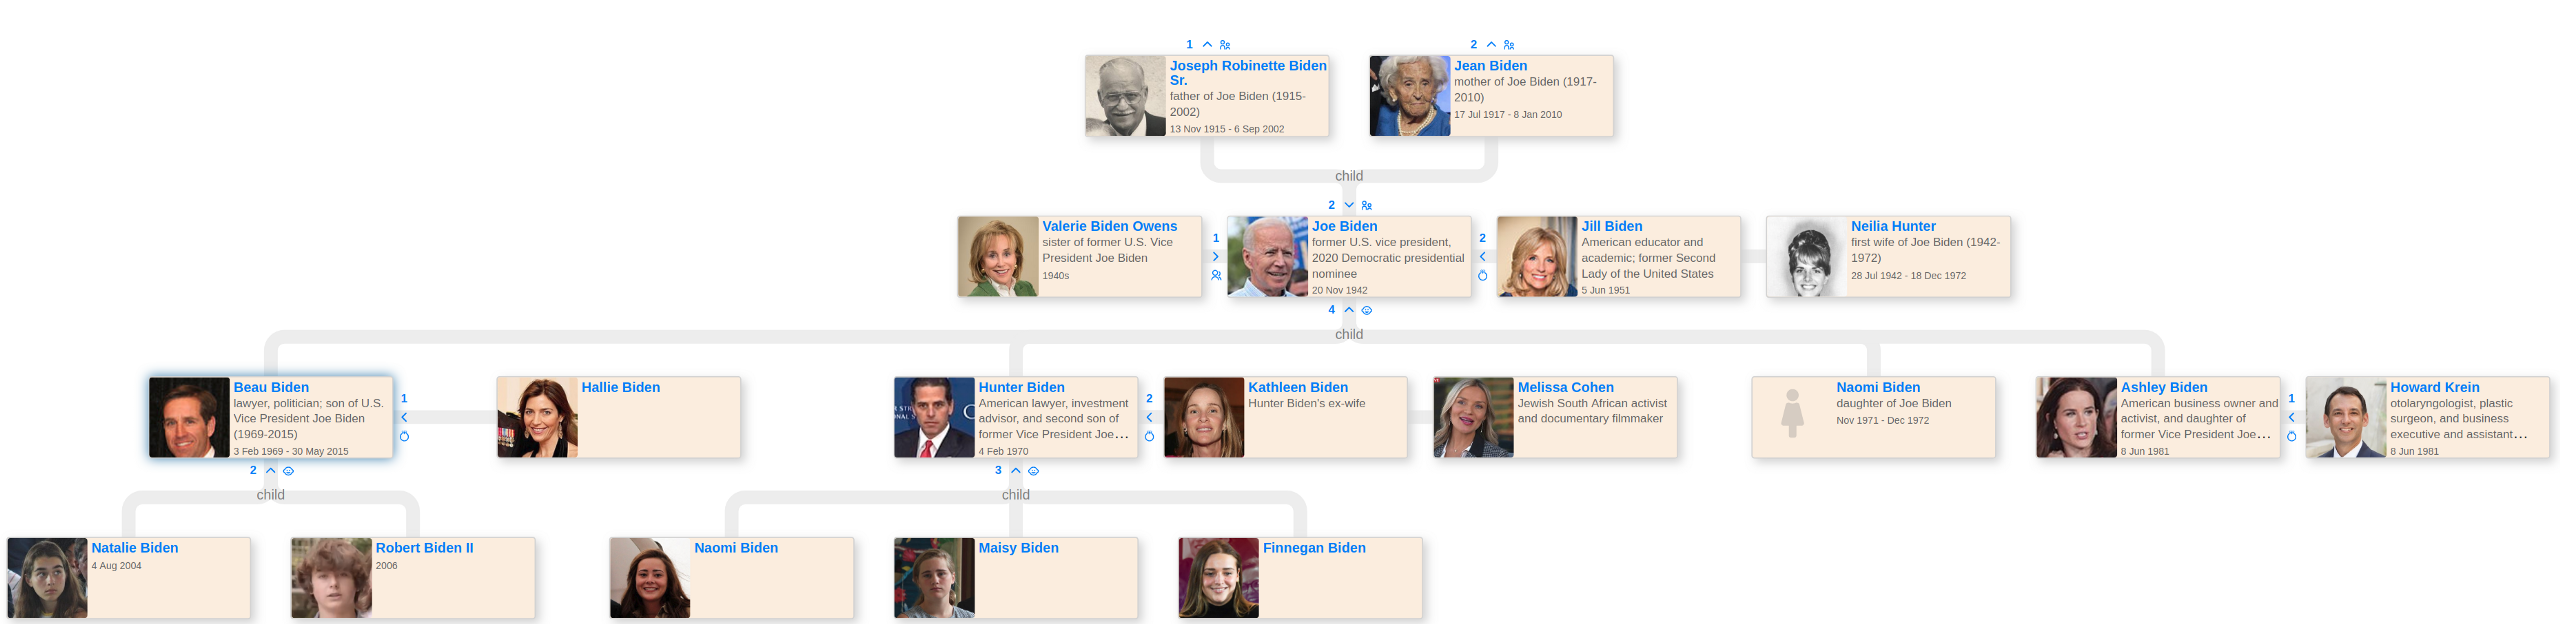 Joe Biden’s family tree - Blog for Entitree